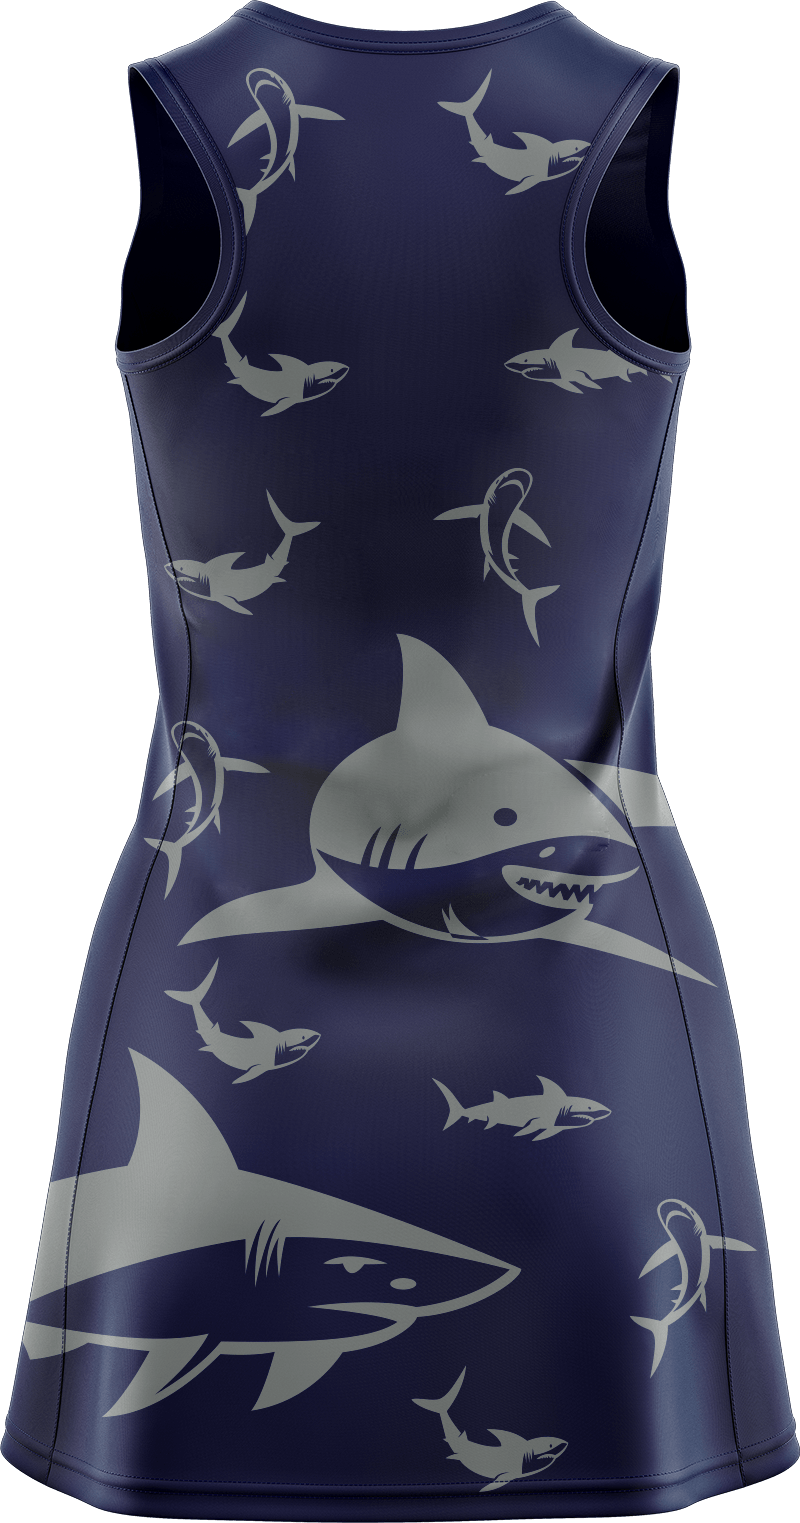 Swim With Sharks Ladies Mini Dress - fungear.com.au